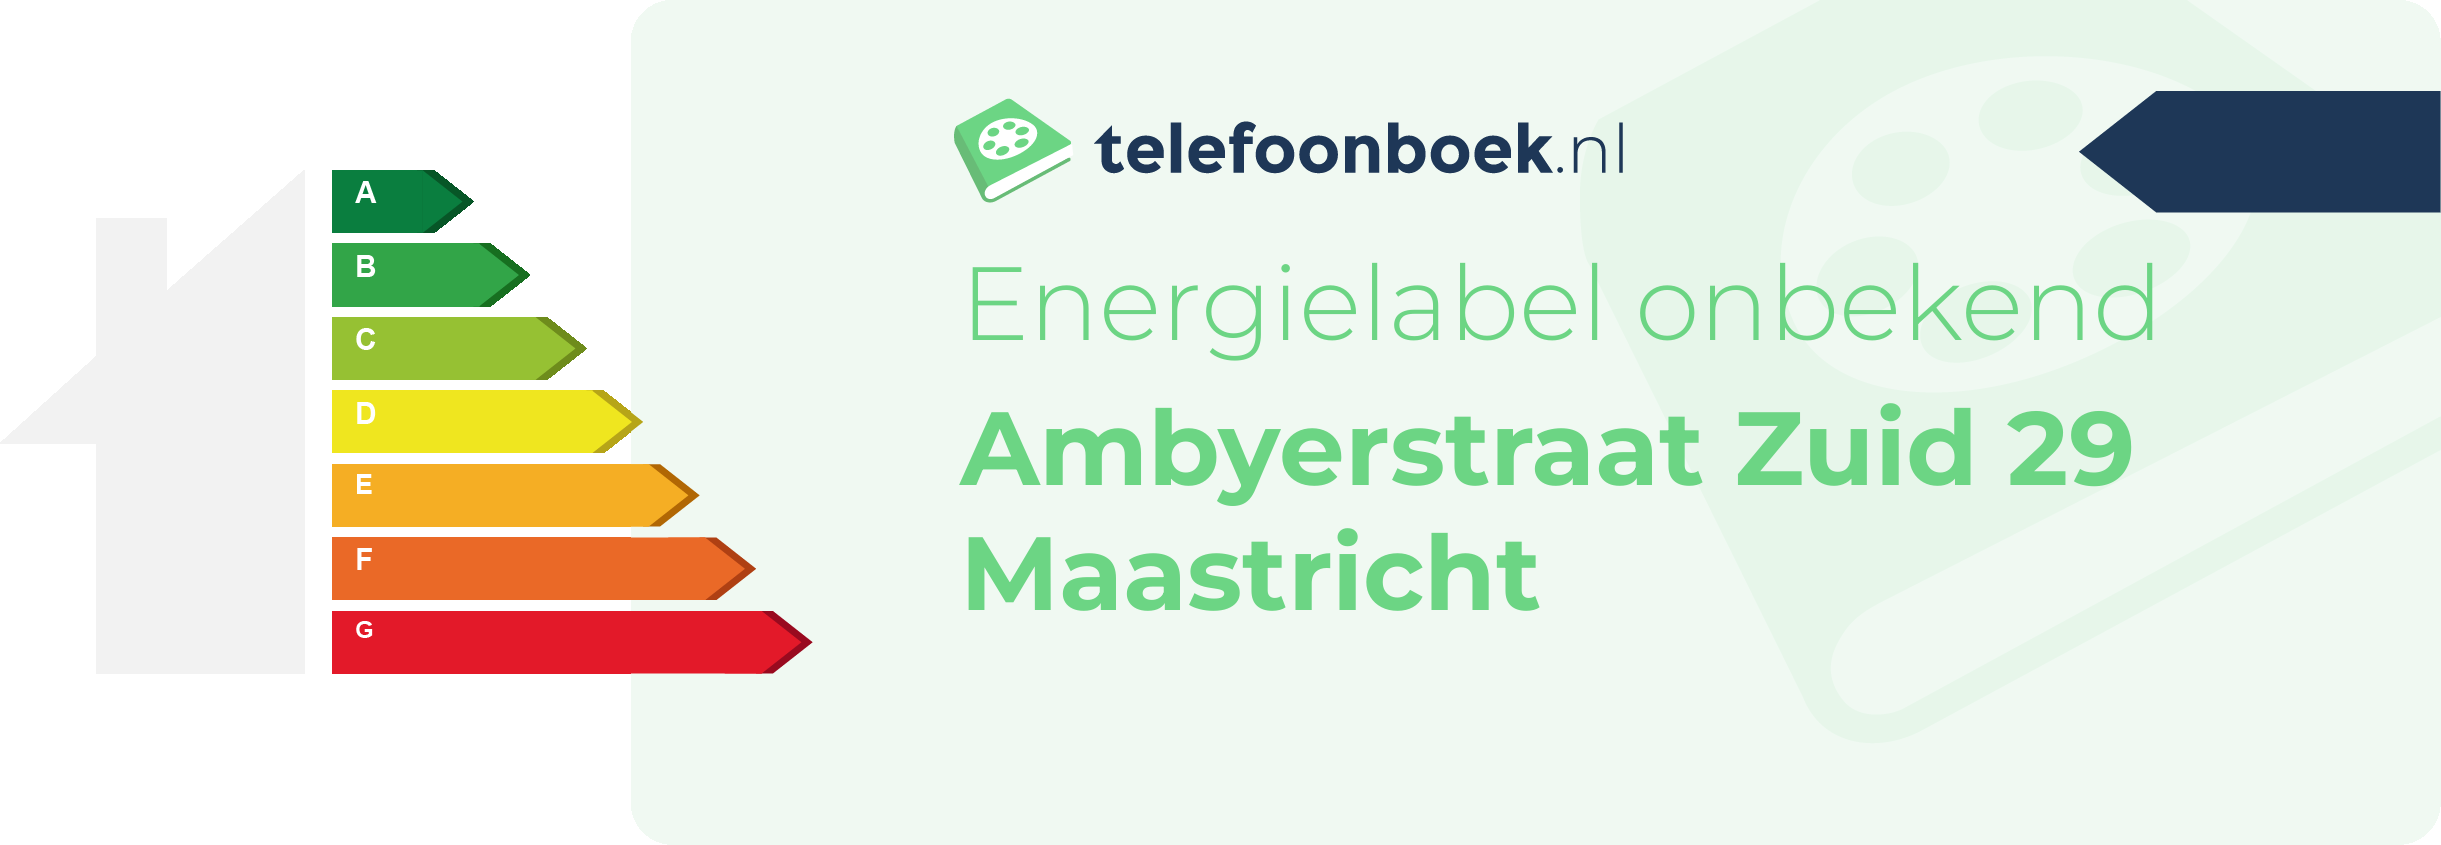 Energielabel Ambyerstraat Zuid 29 Maastricht